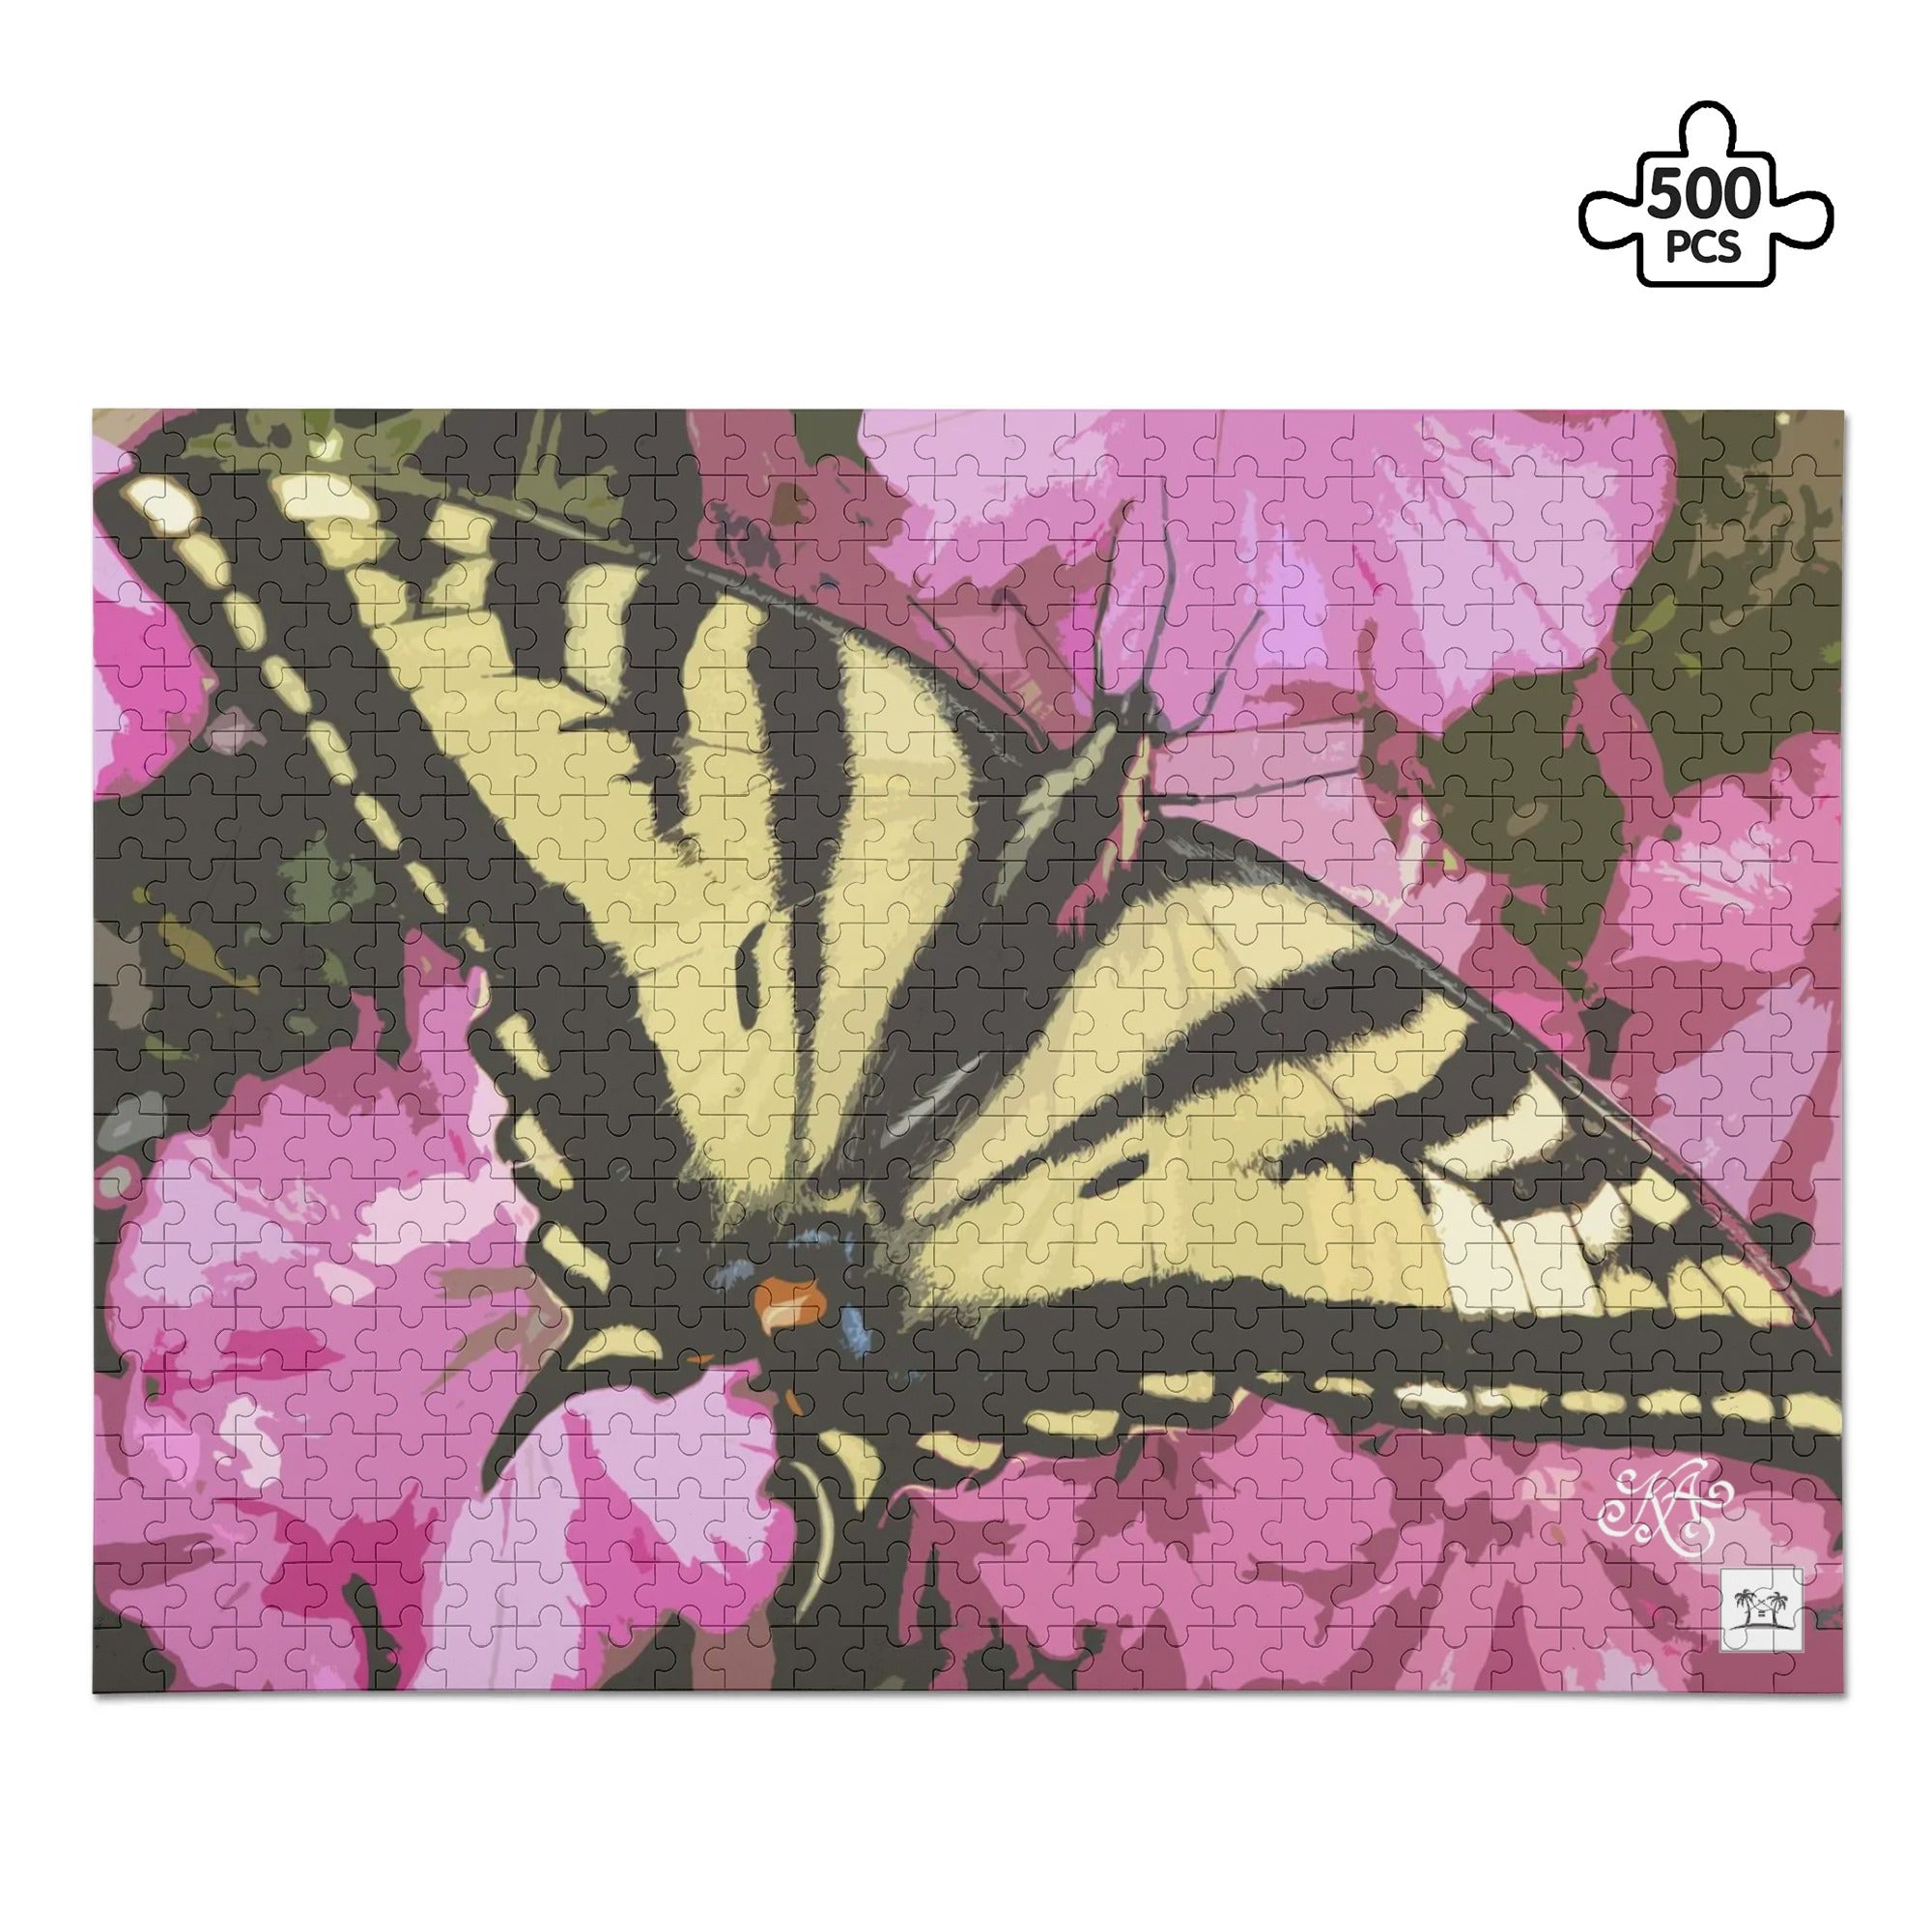 Wooden Jigsaw Puzzle (500 Pcs) - Swallowtail